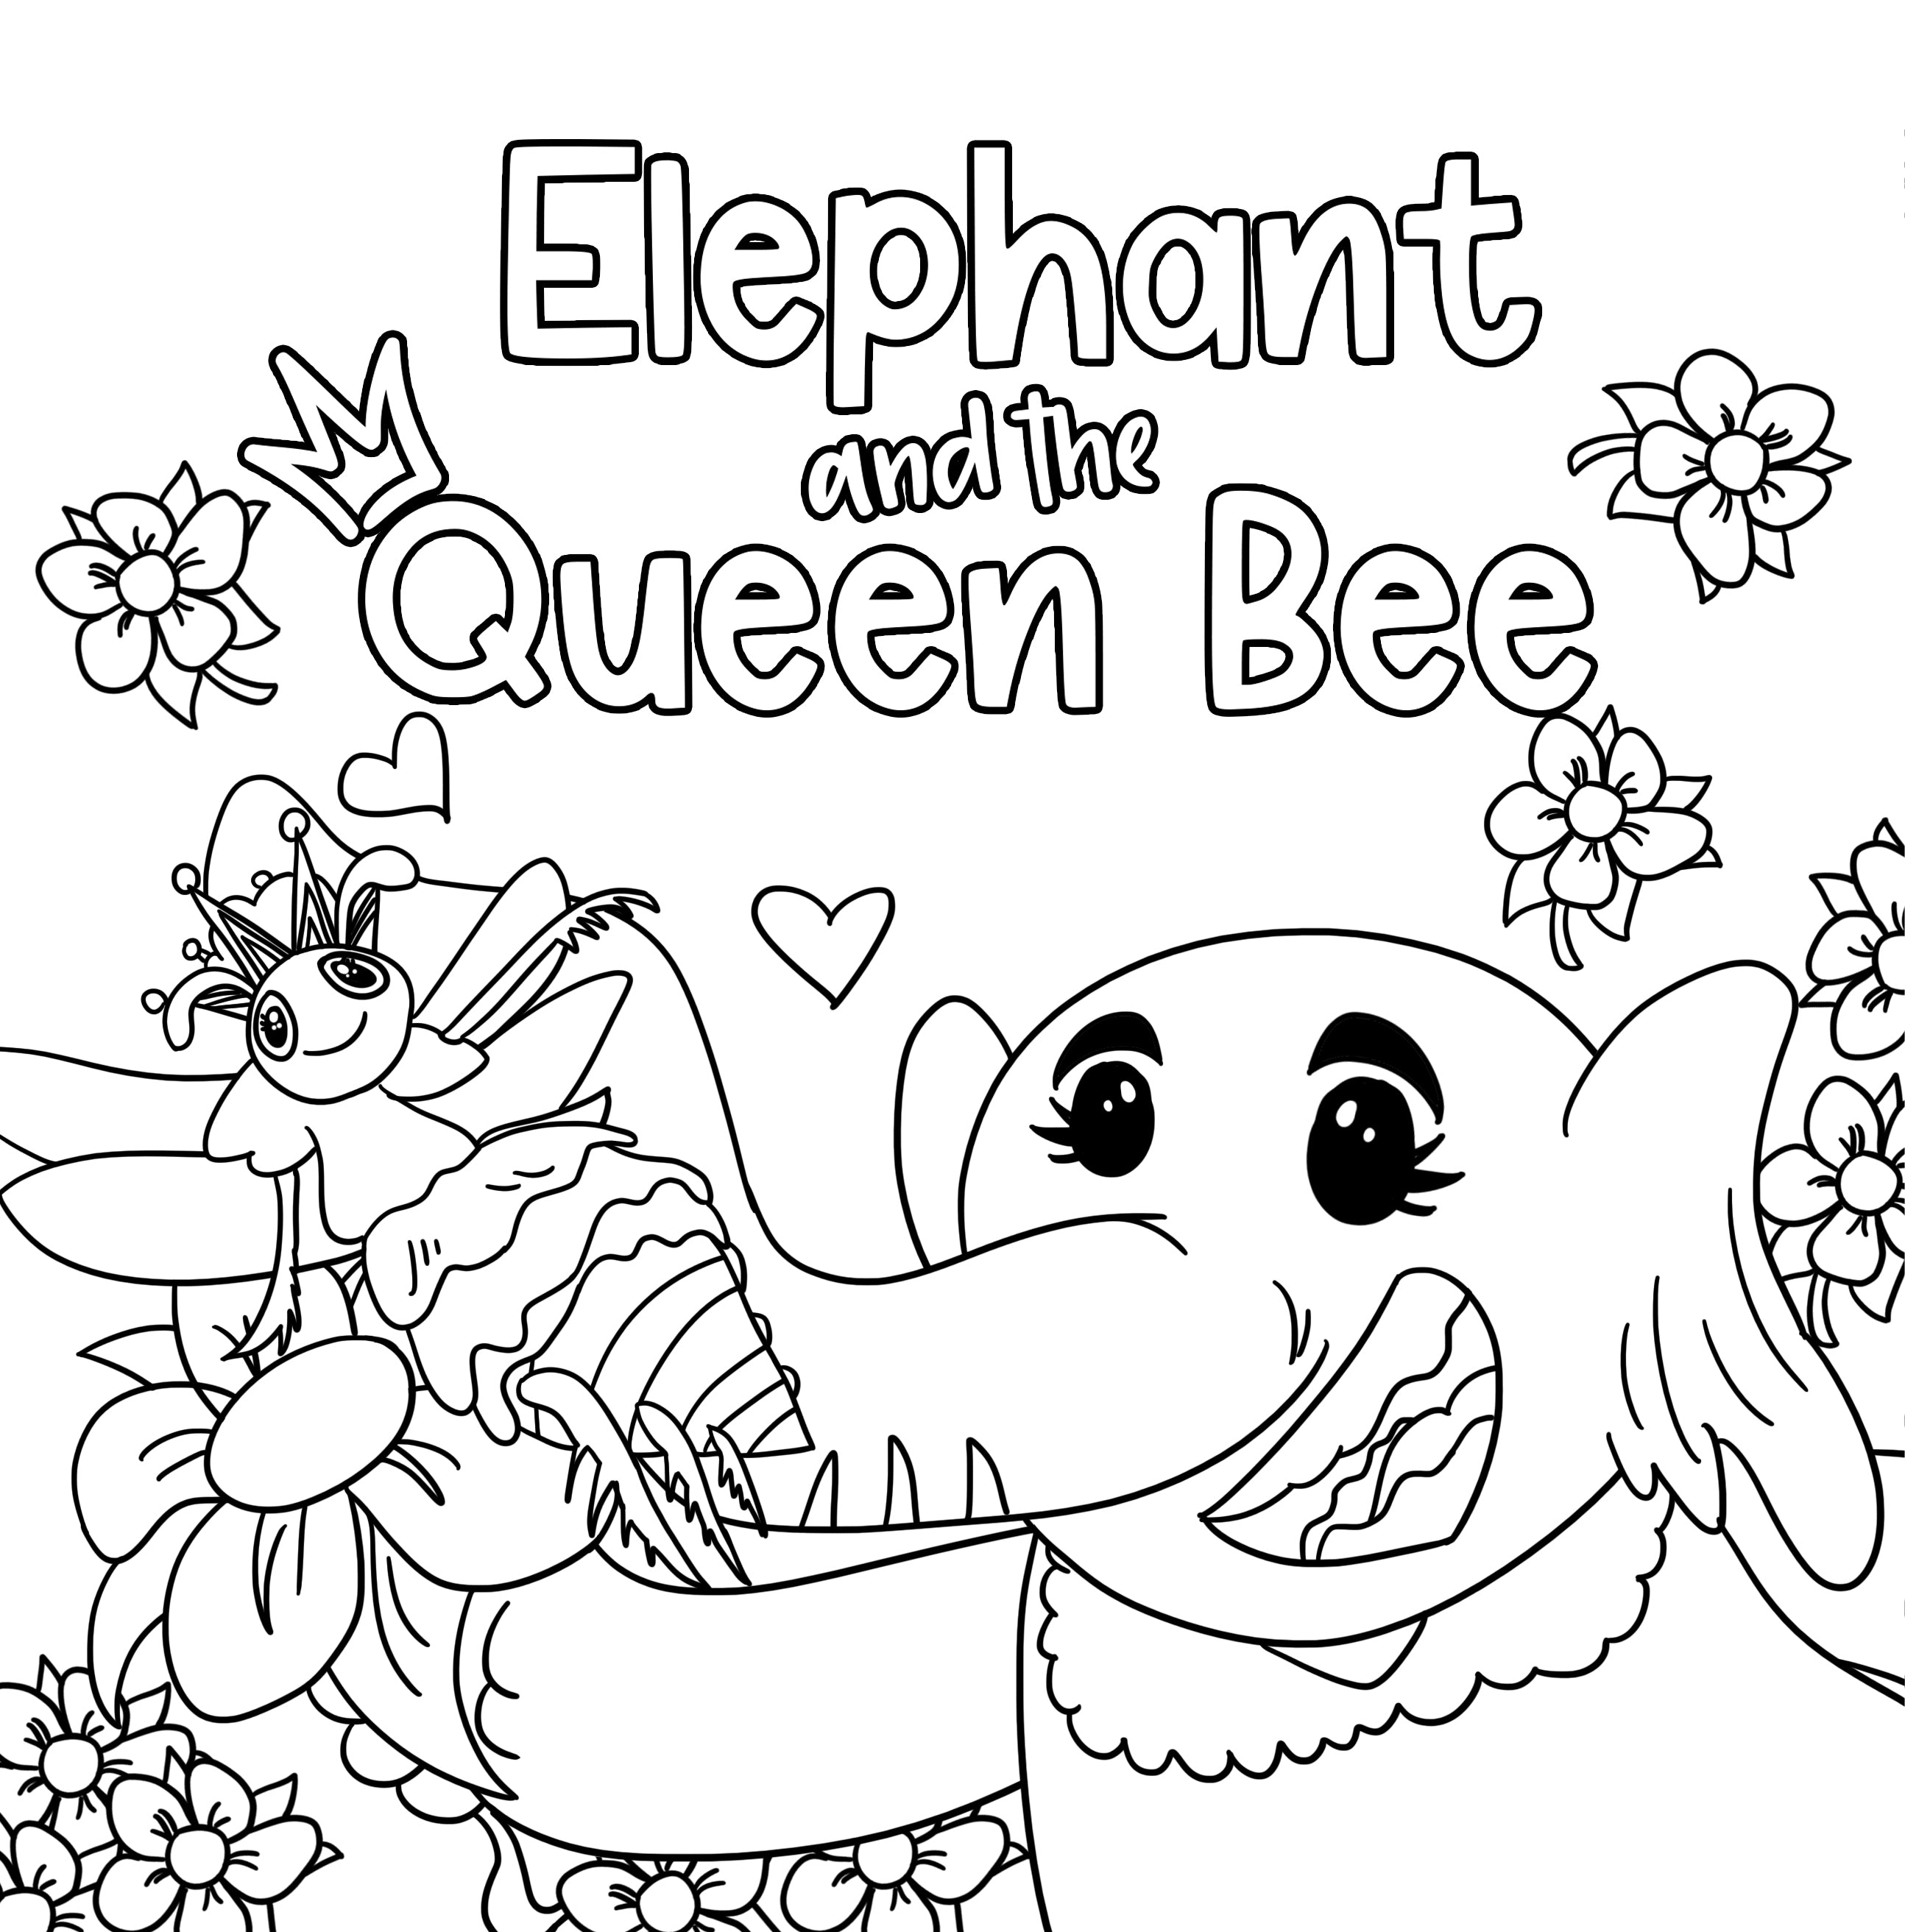 Elephant and Queen Bee (Hardcover)